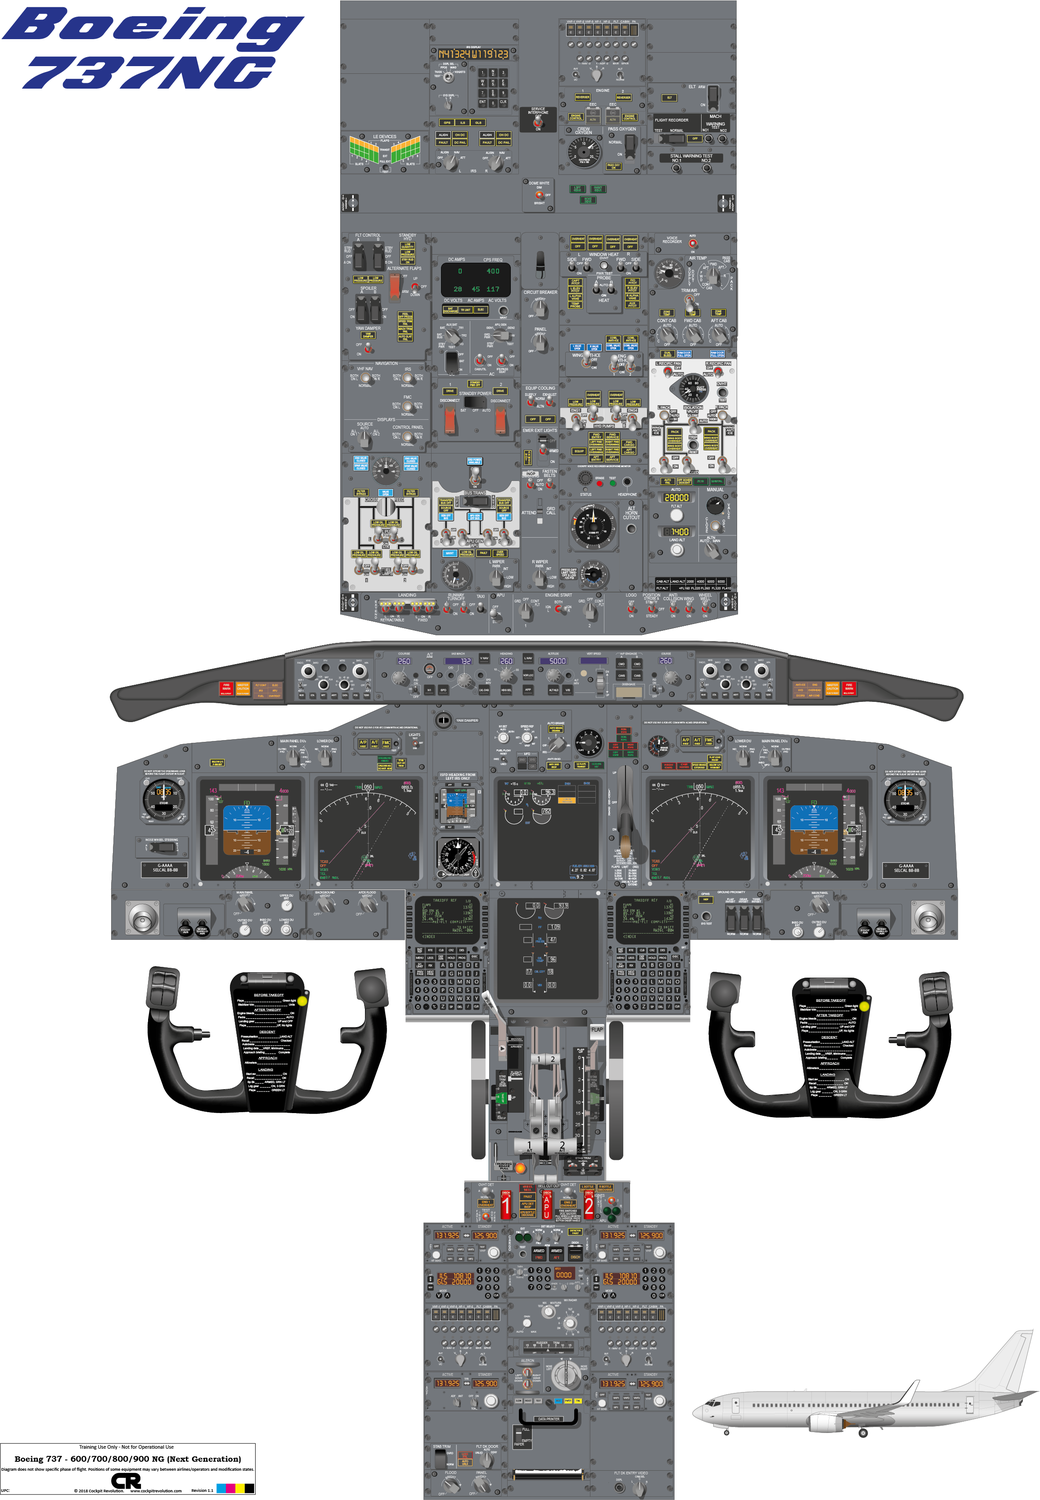 Boeing 737-NG & MAX Cockpit Posters - Digital Download